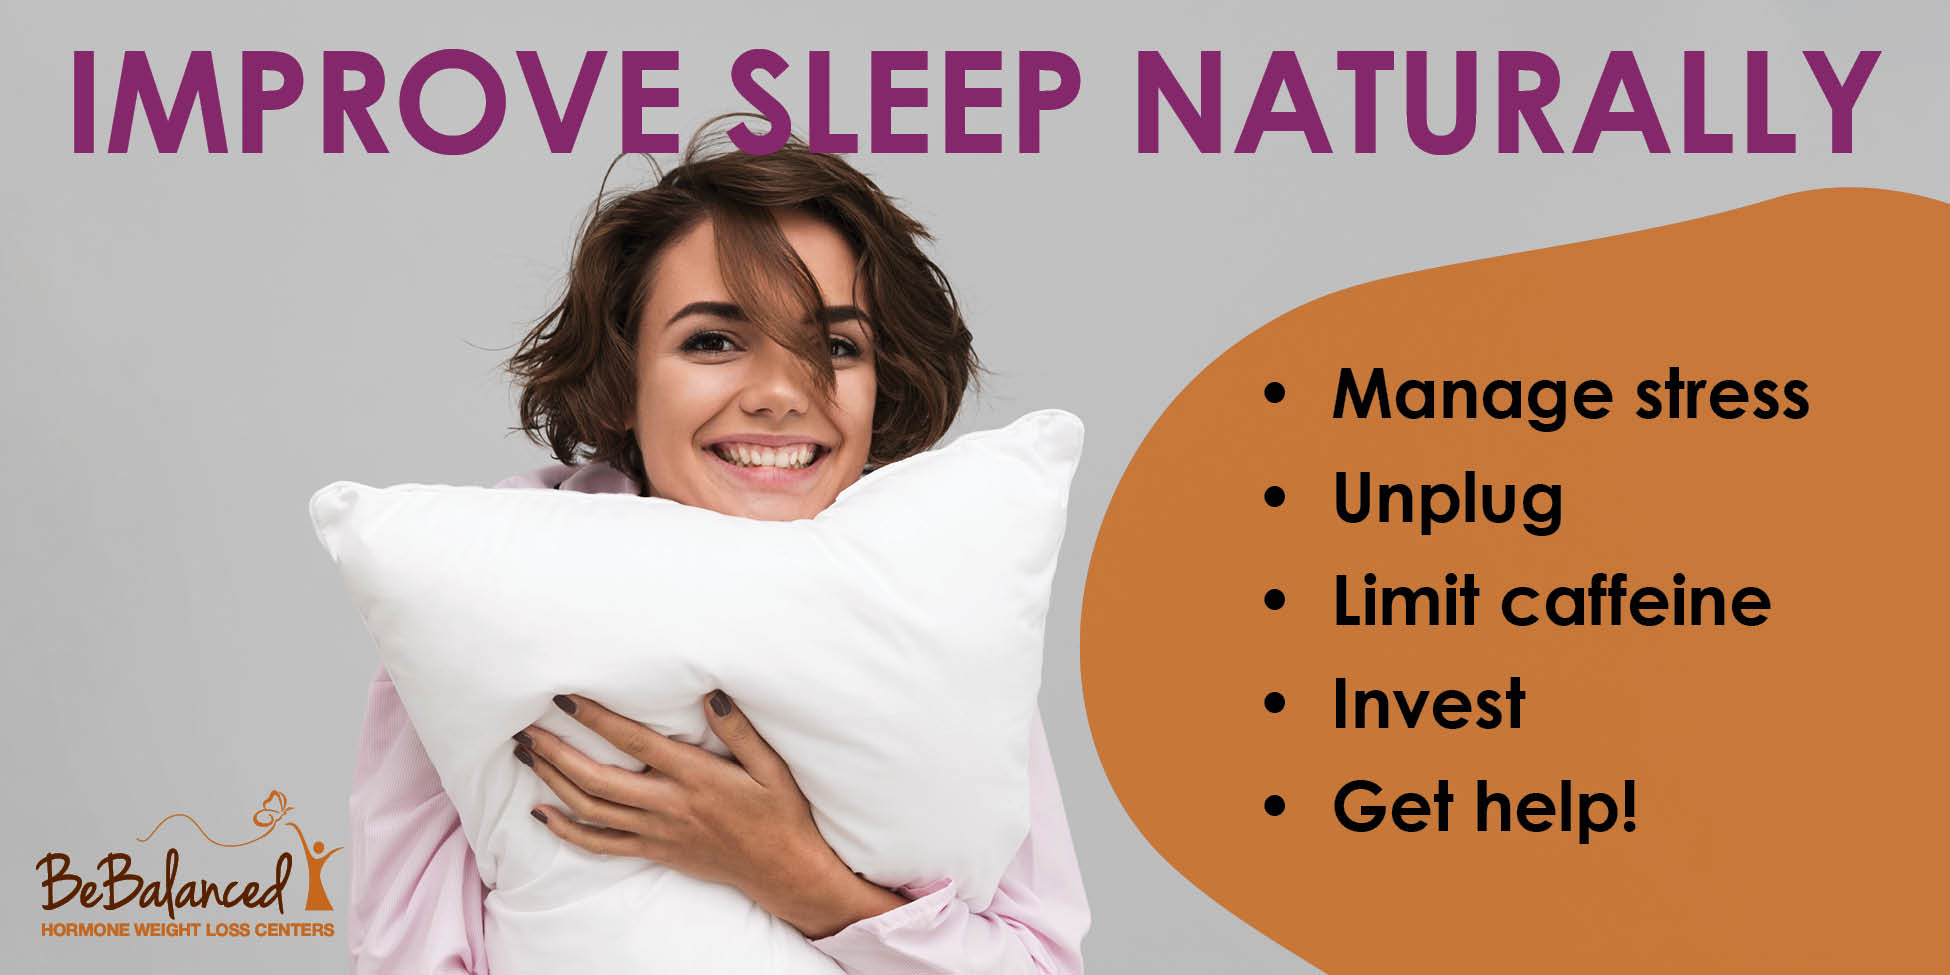 5 ways to improve your sleep naturally!